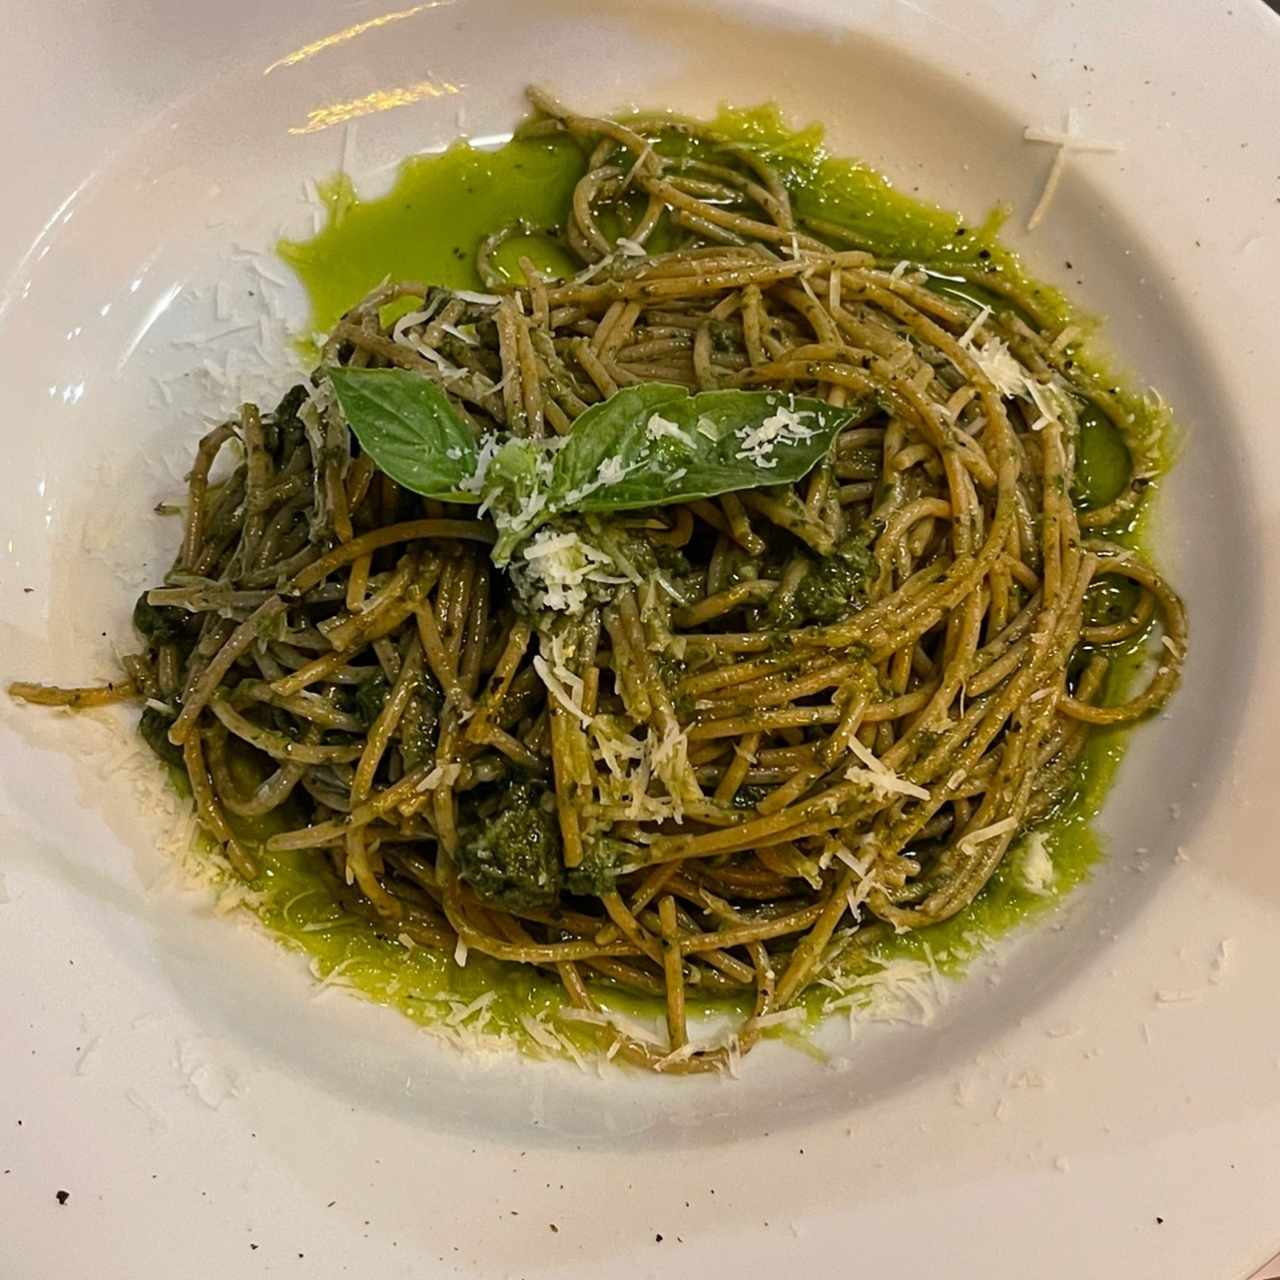 Pasta - Spaghetti Pesto Genovese